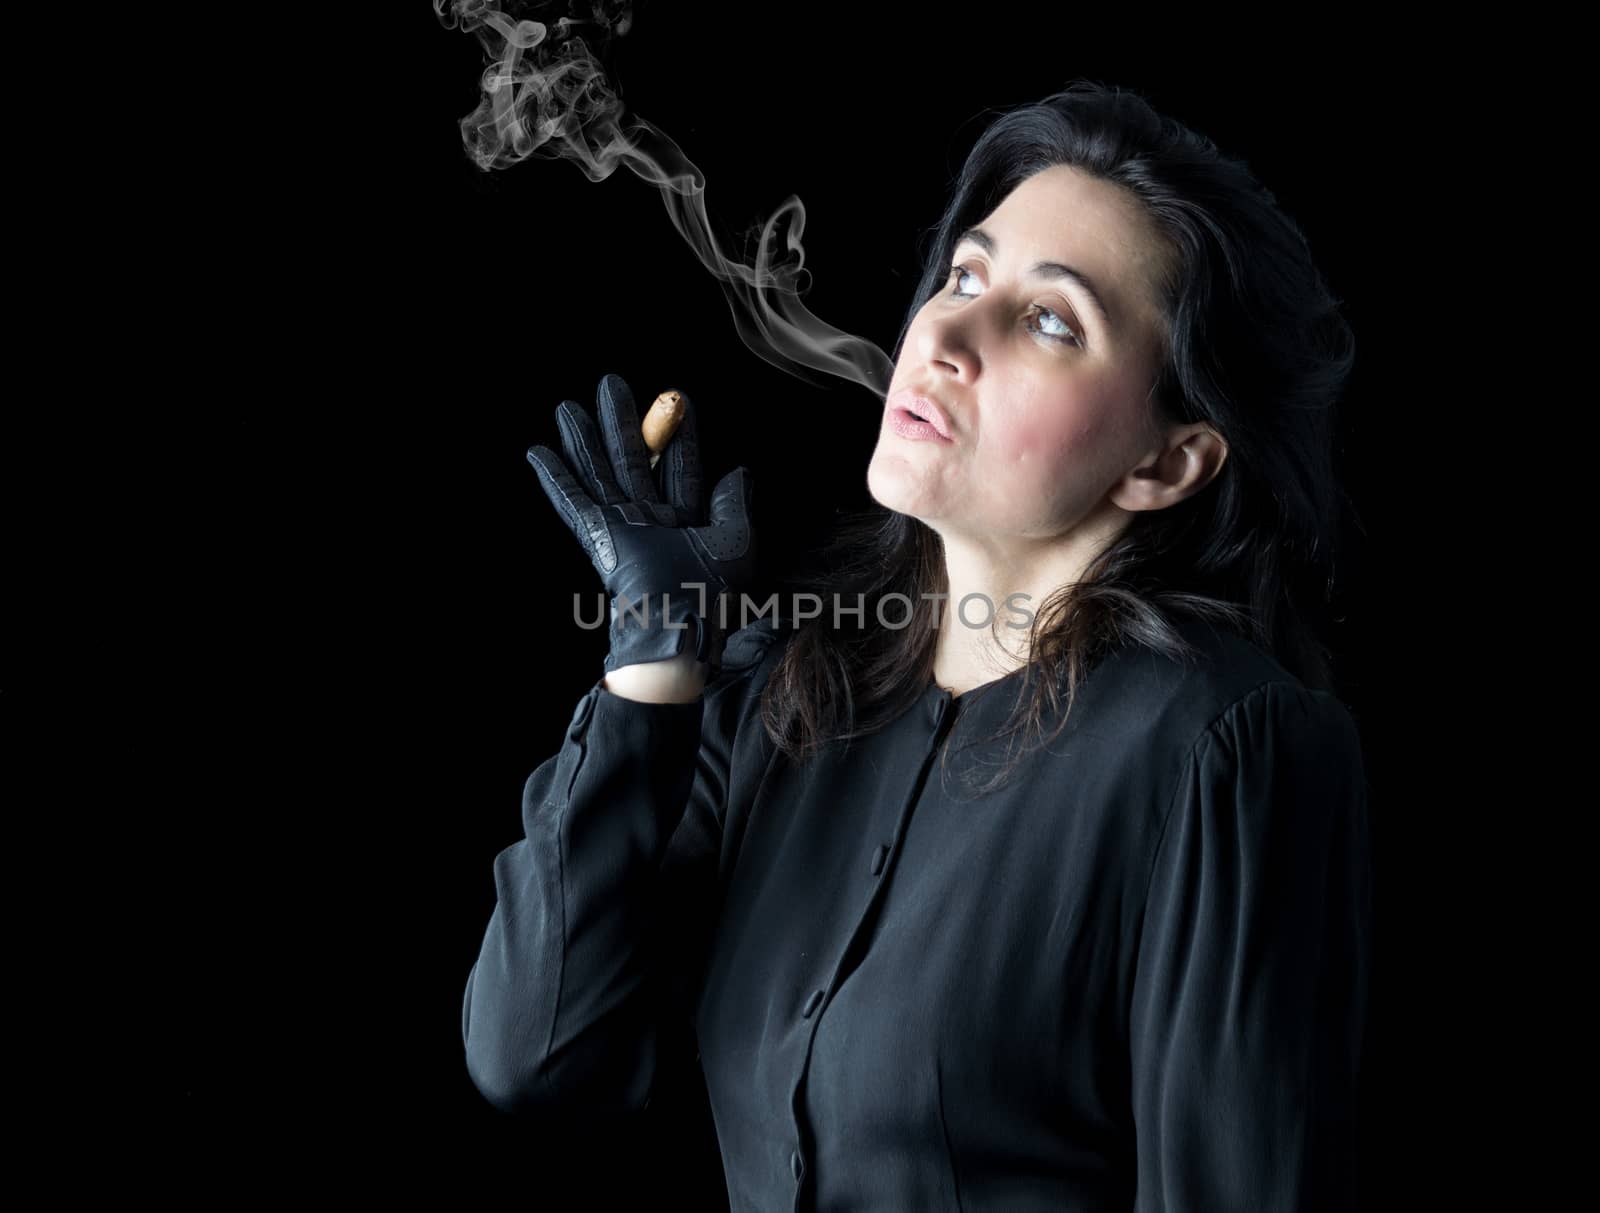 Woman in Black Blowing Cigar Smoke by Toro_the_Bull